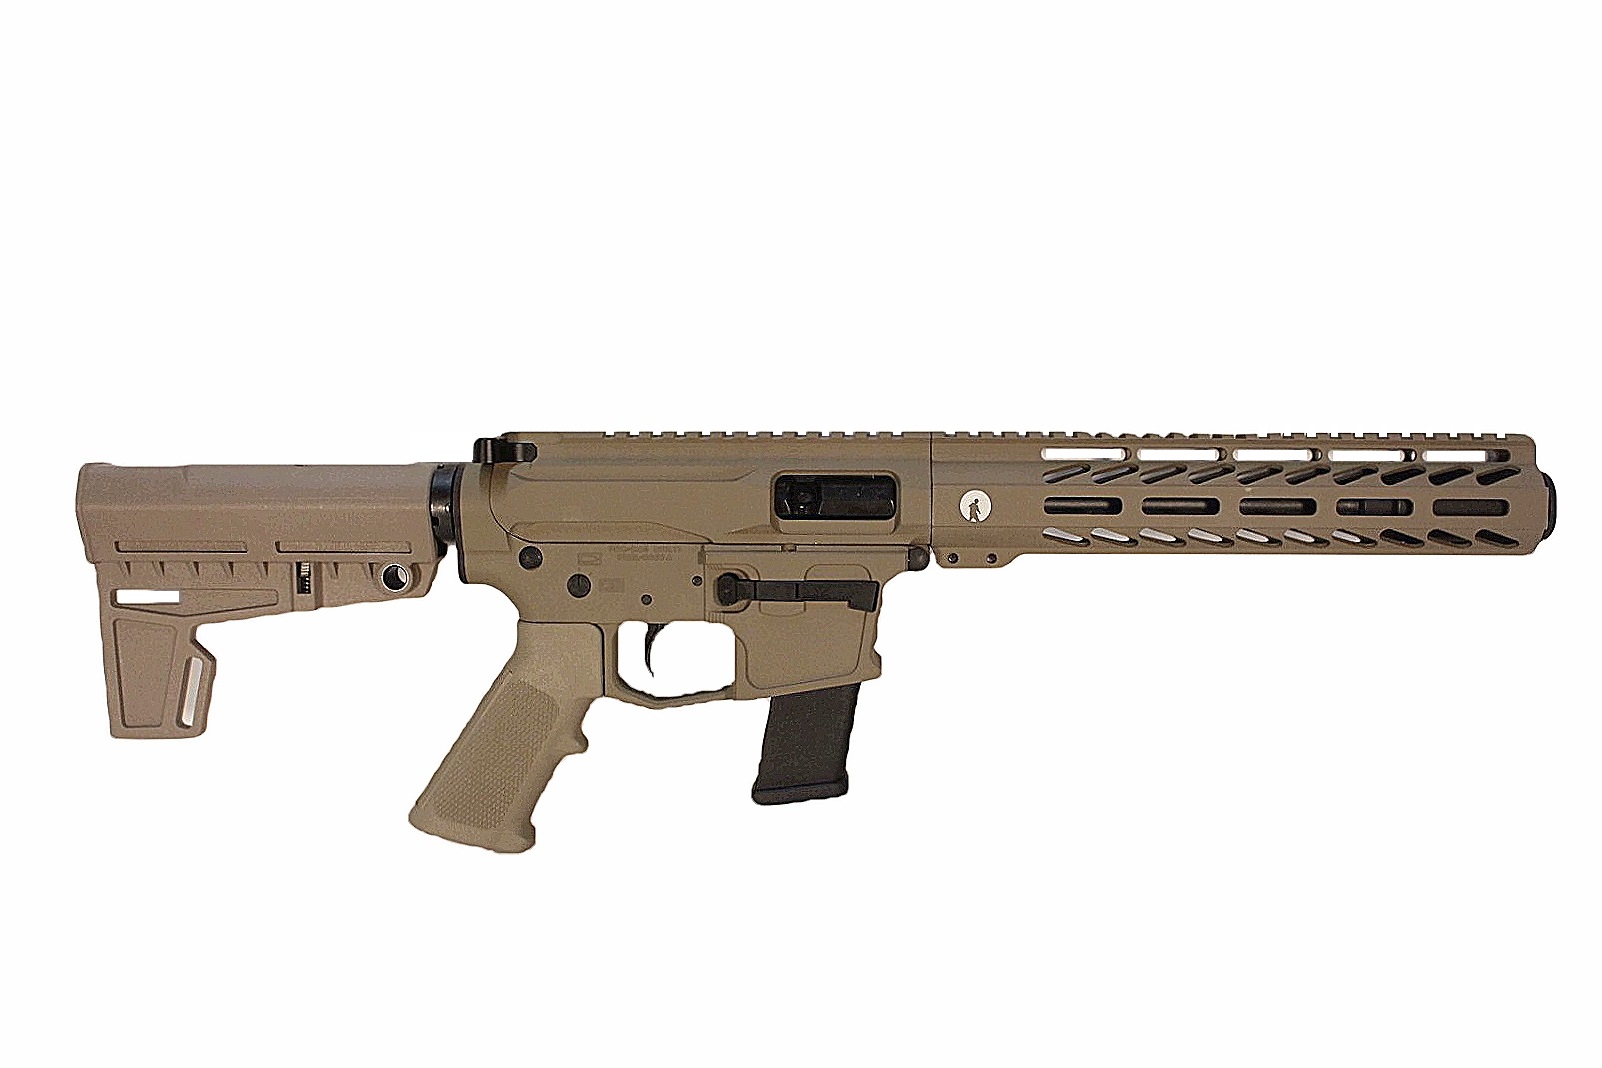 8.5 inch 40 S&W AR Pistol in FDE Color